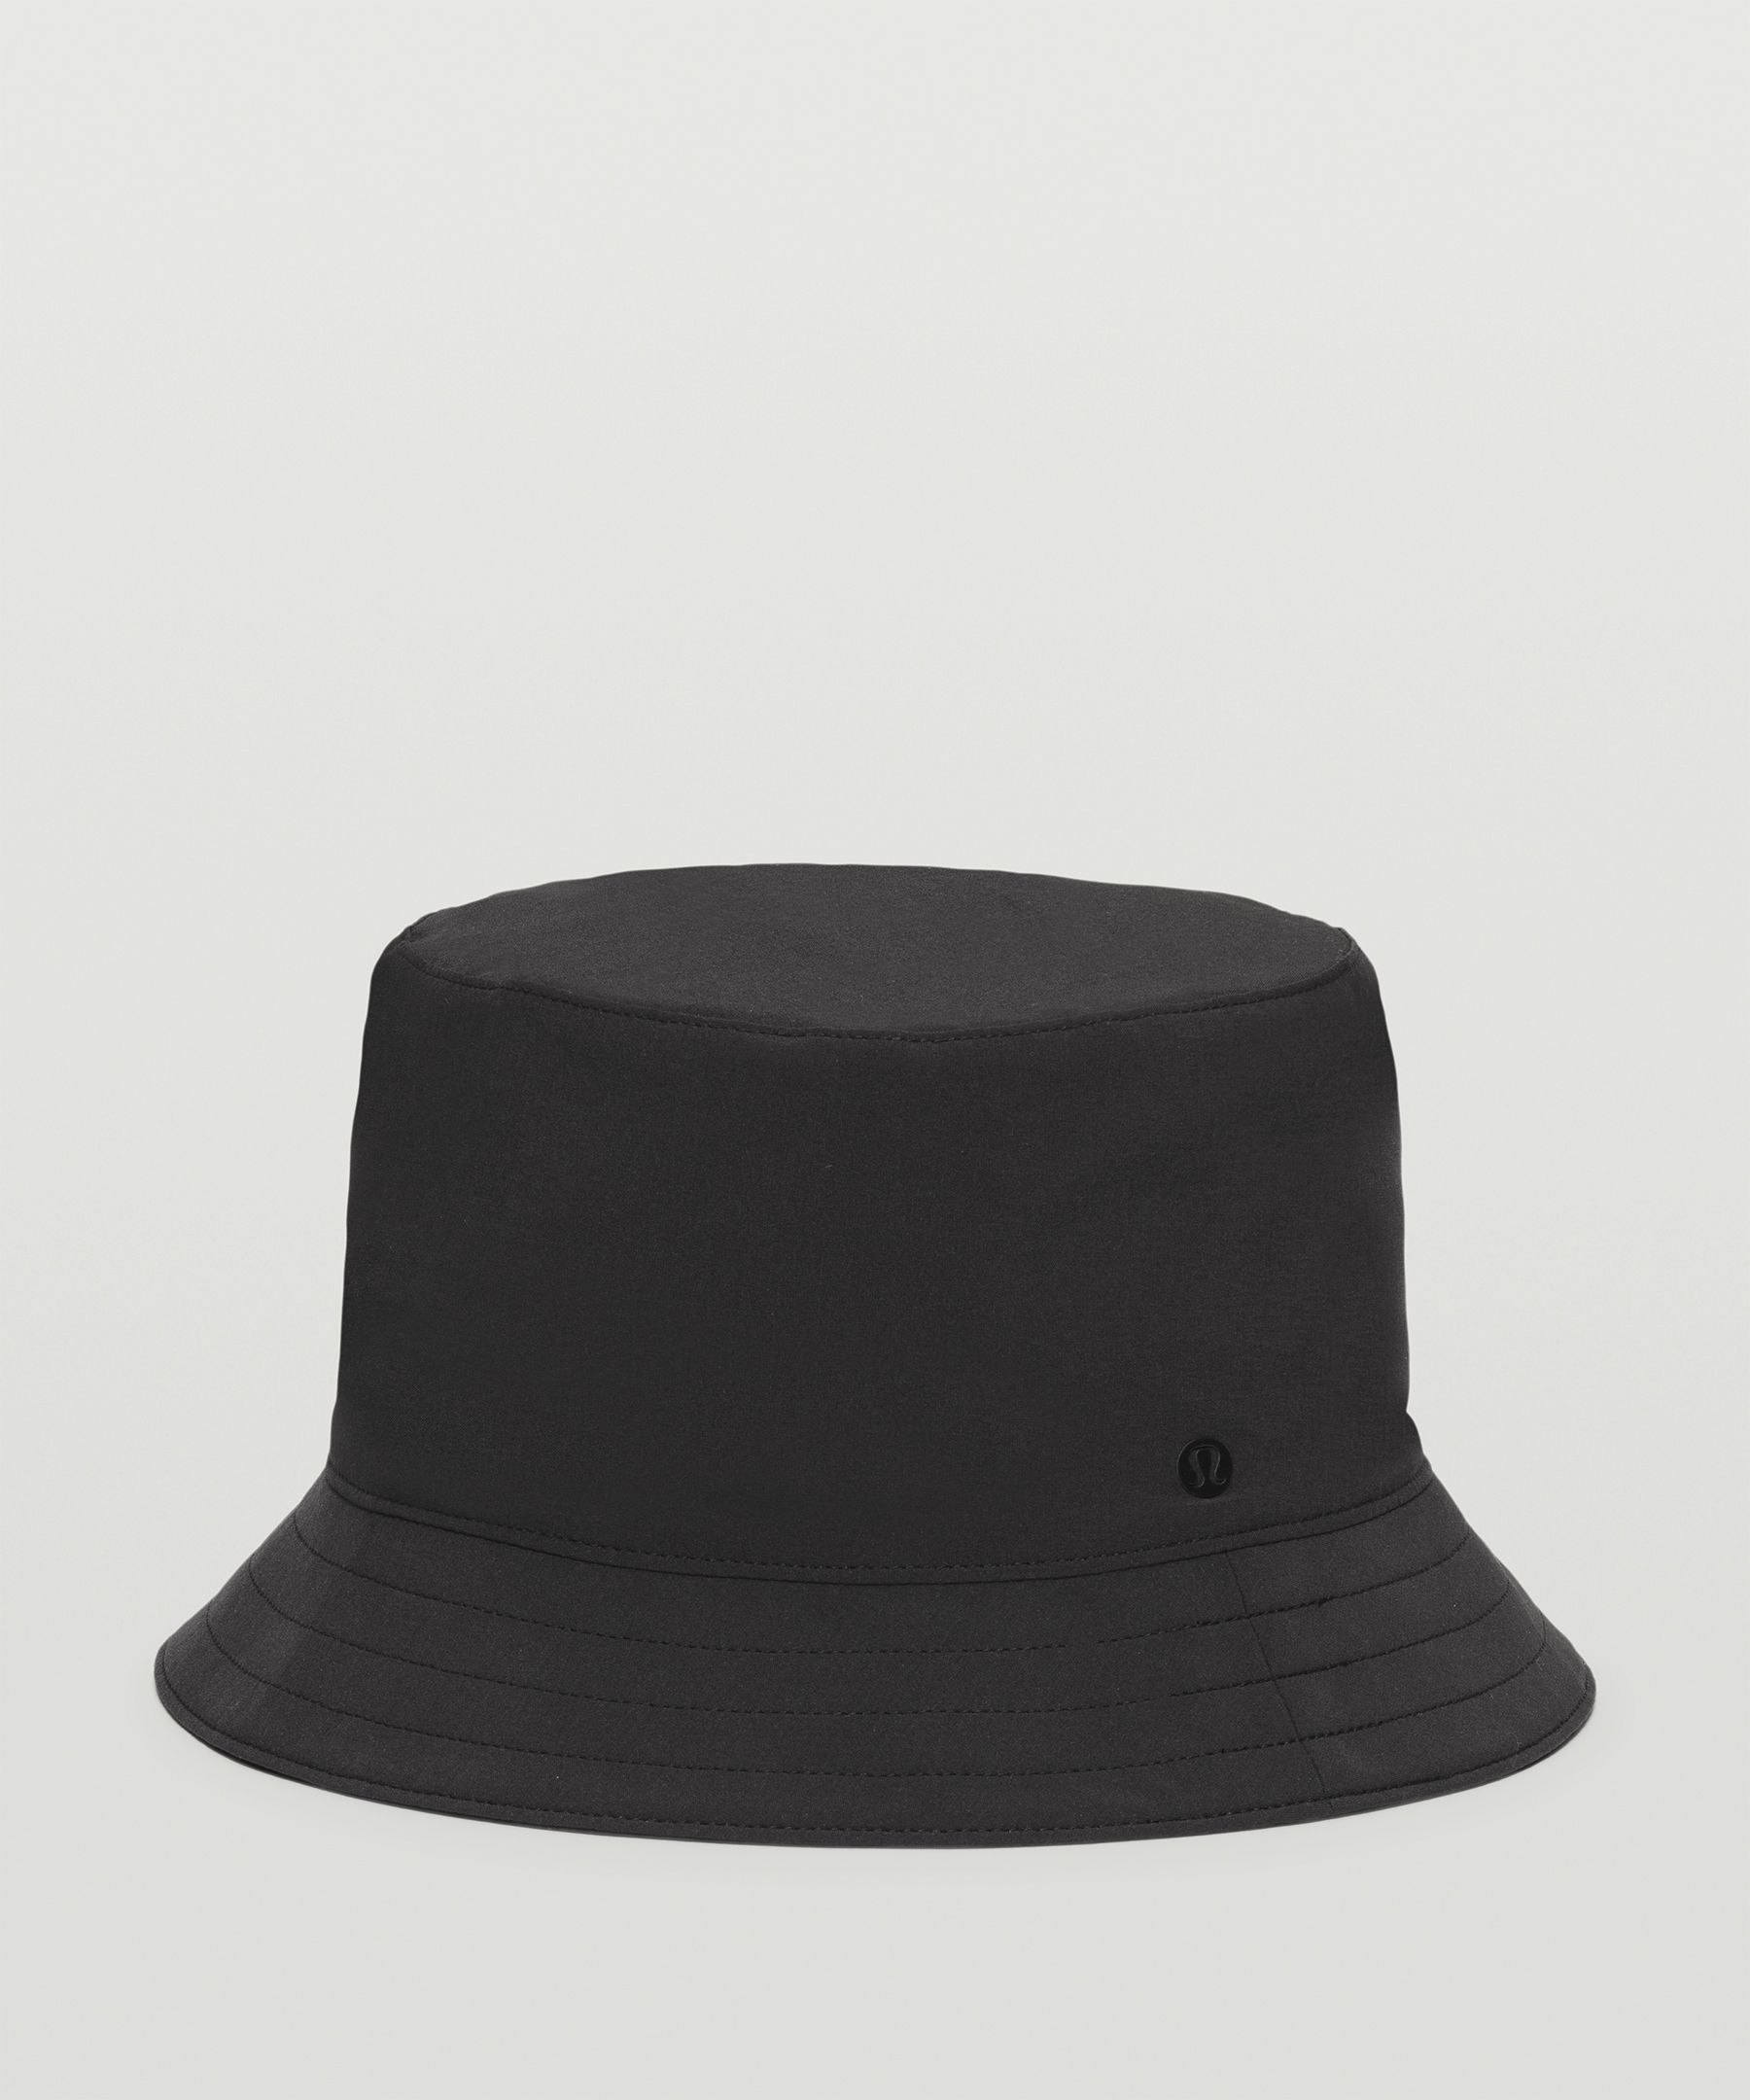 Lululemon Both Ways Reversible Bucket Hat In Black/heritage 365 Camo Deep Coal